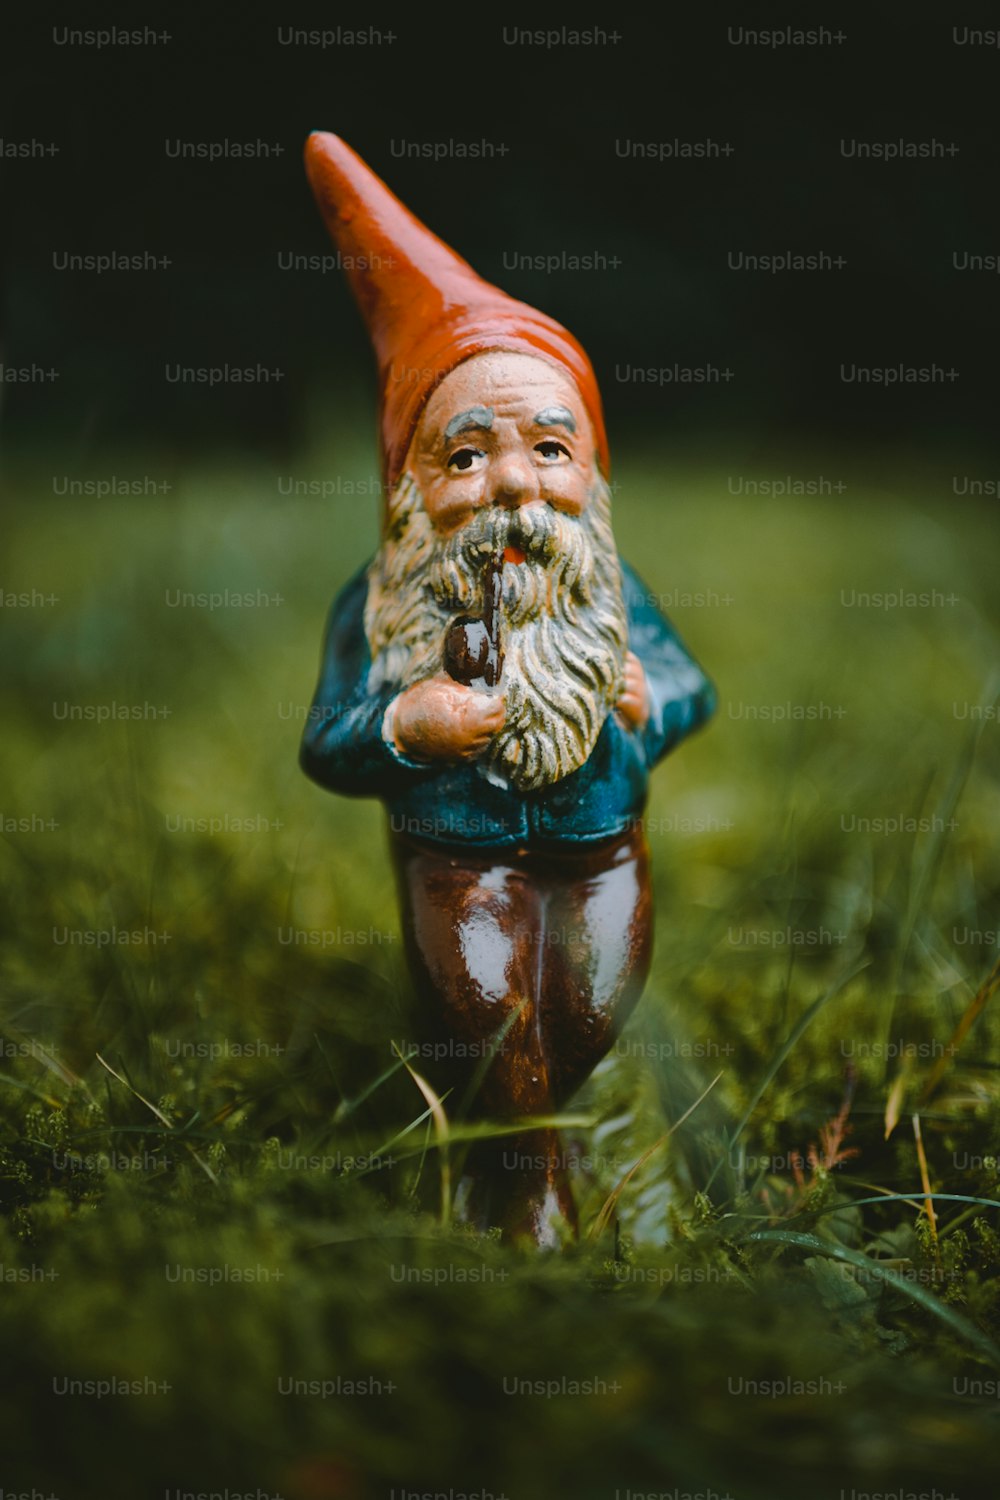 a gnome figurine sitting in the grass